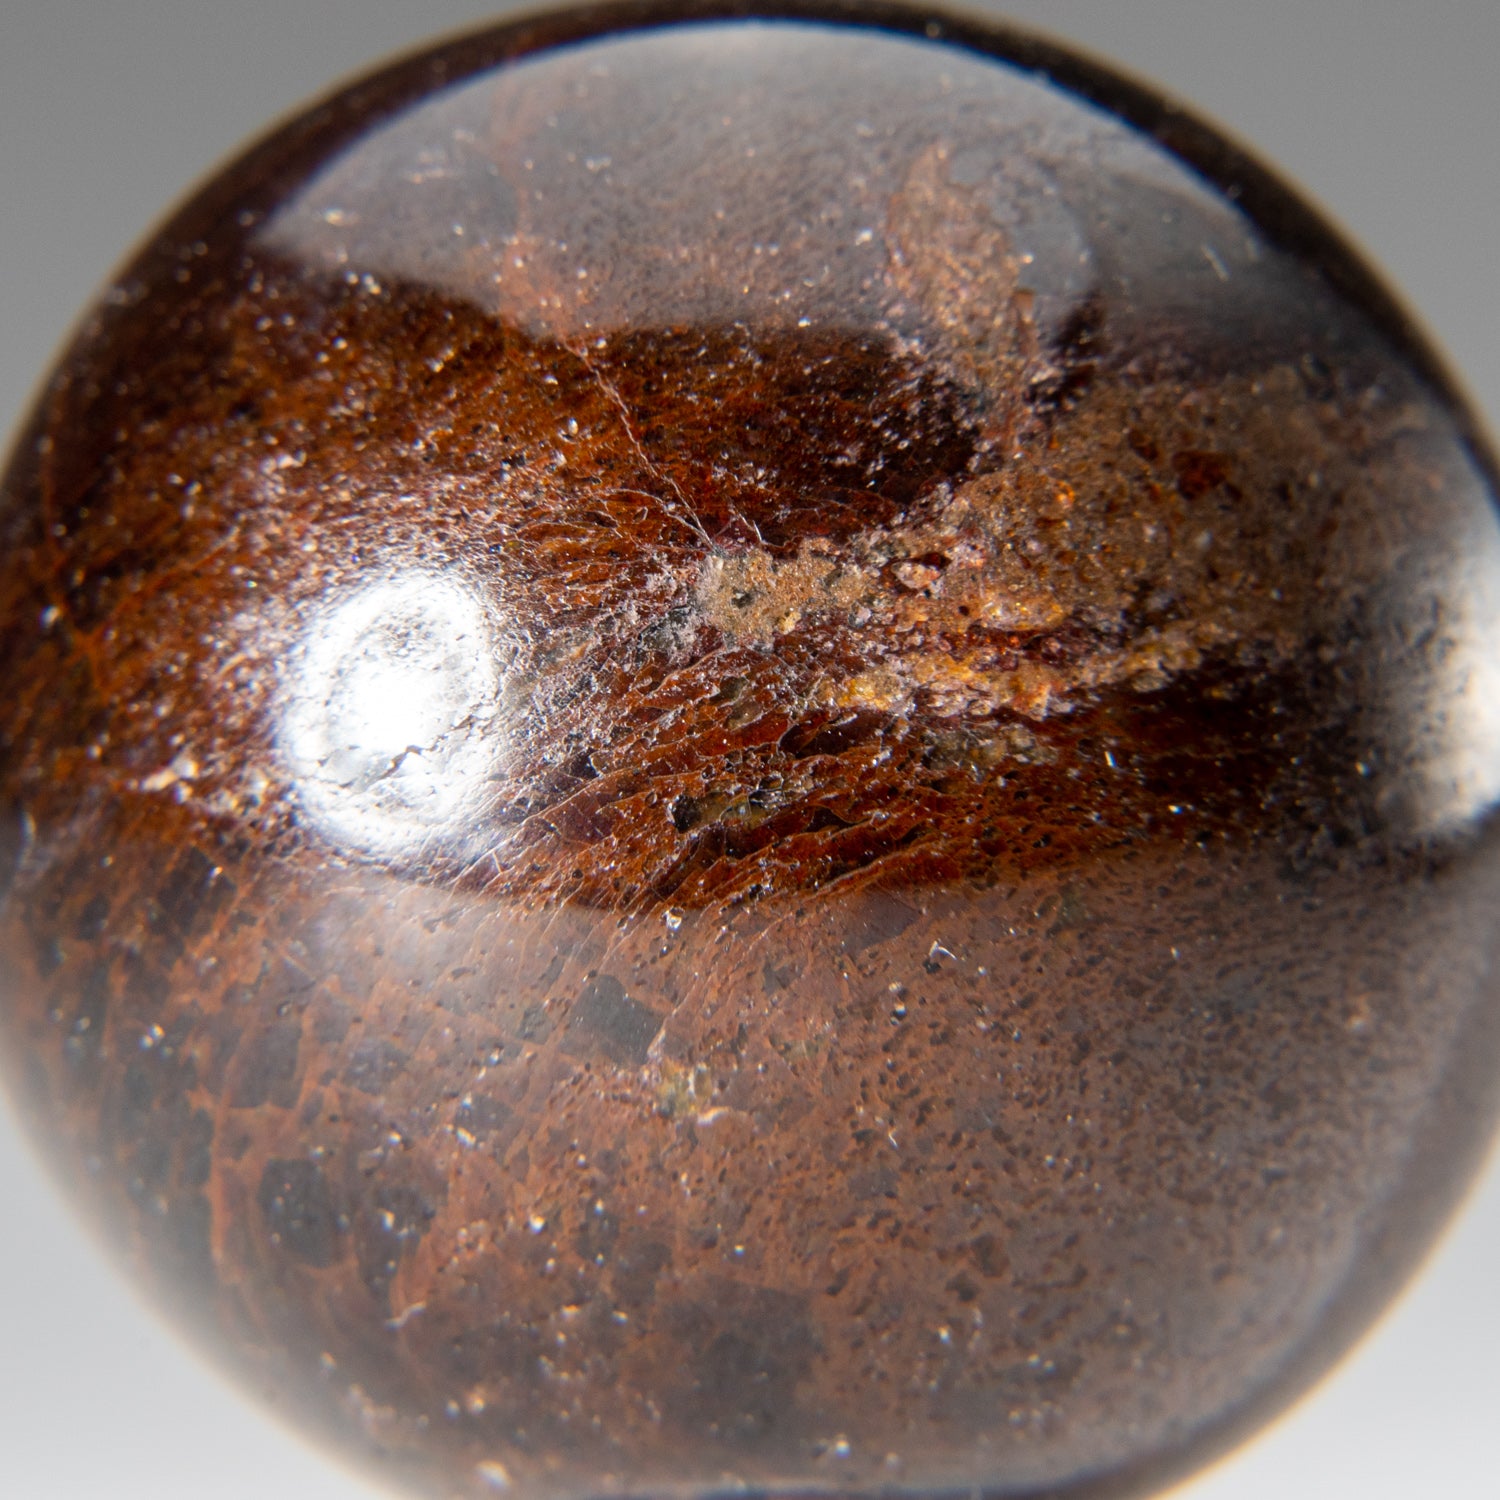 Genuine Polished Garnet Sphere (1.5") with Acrylic Display Stand